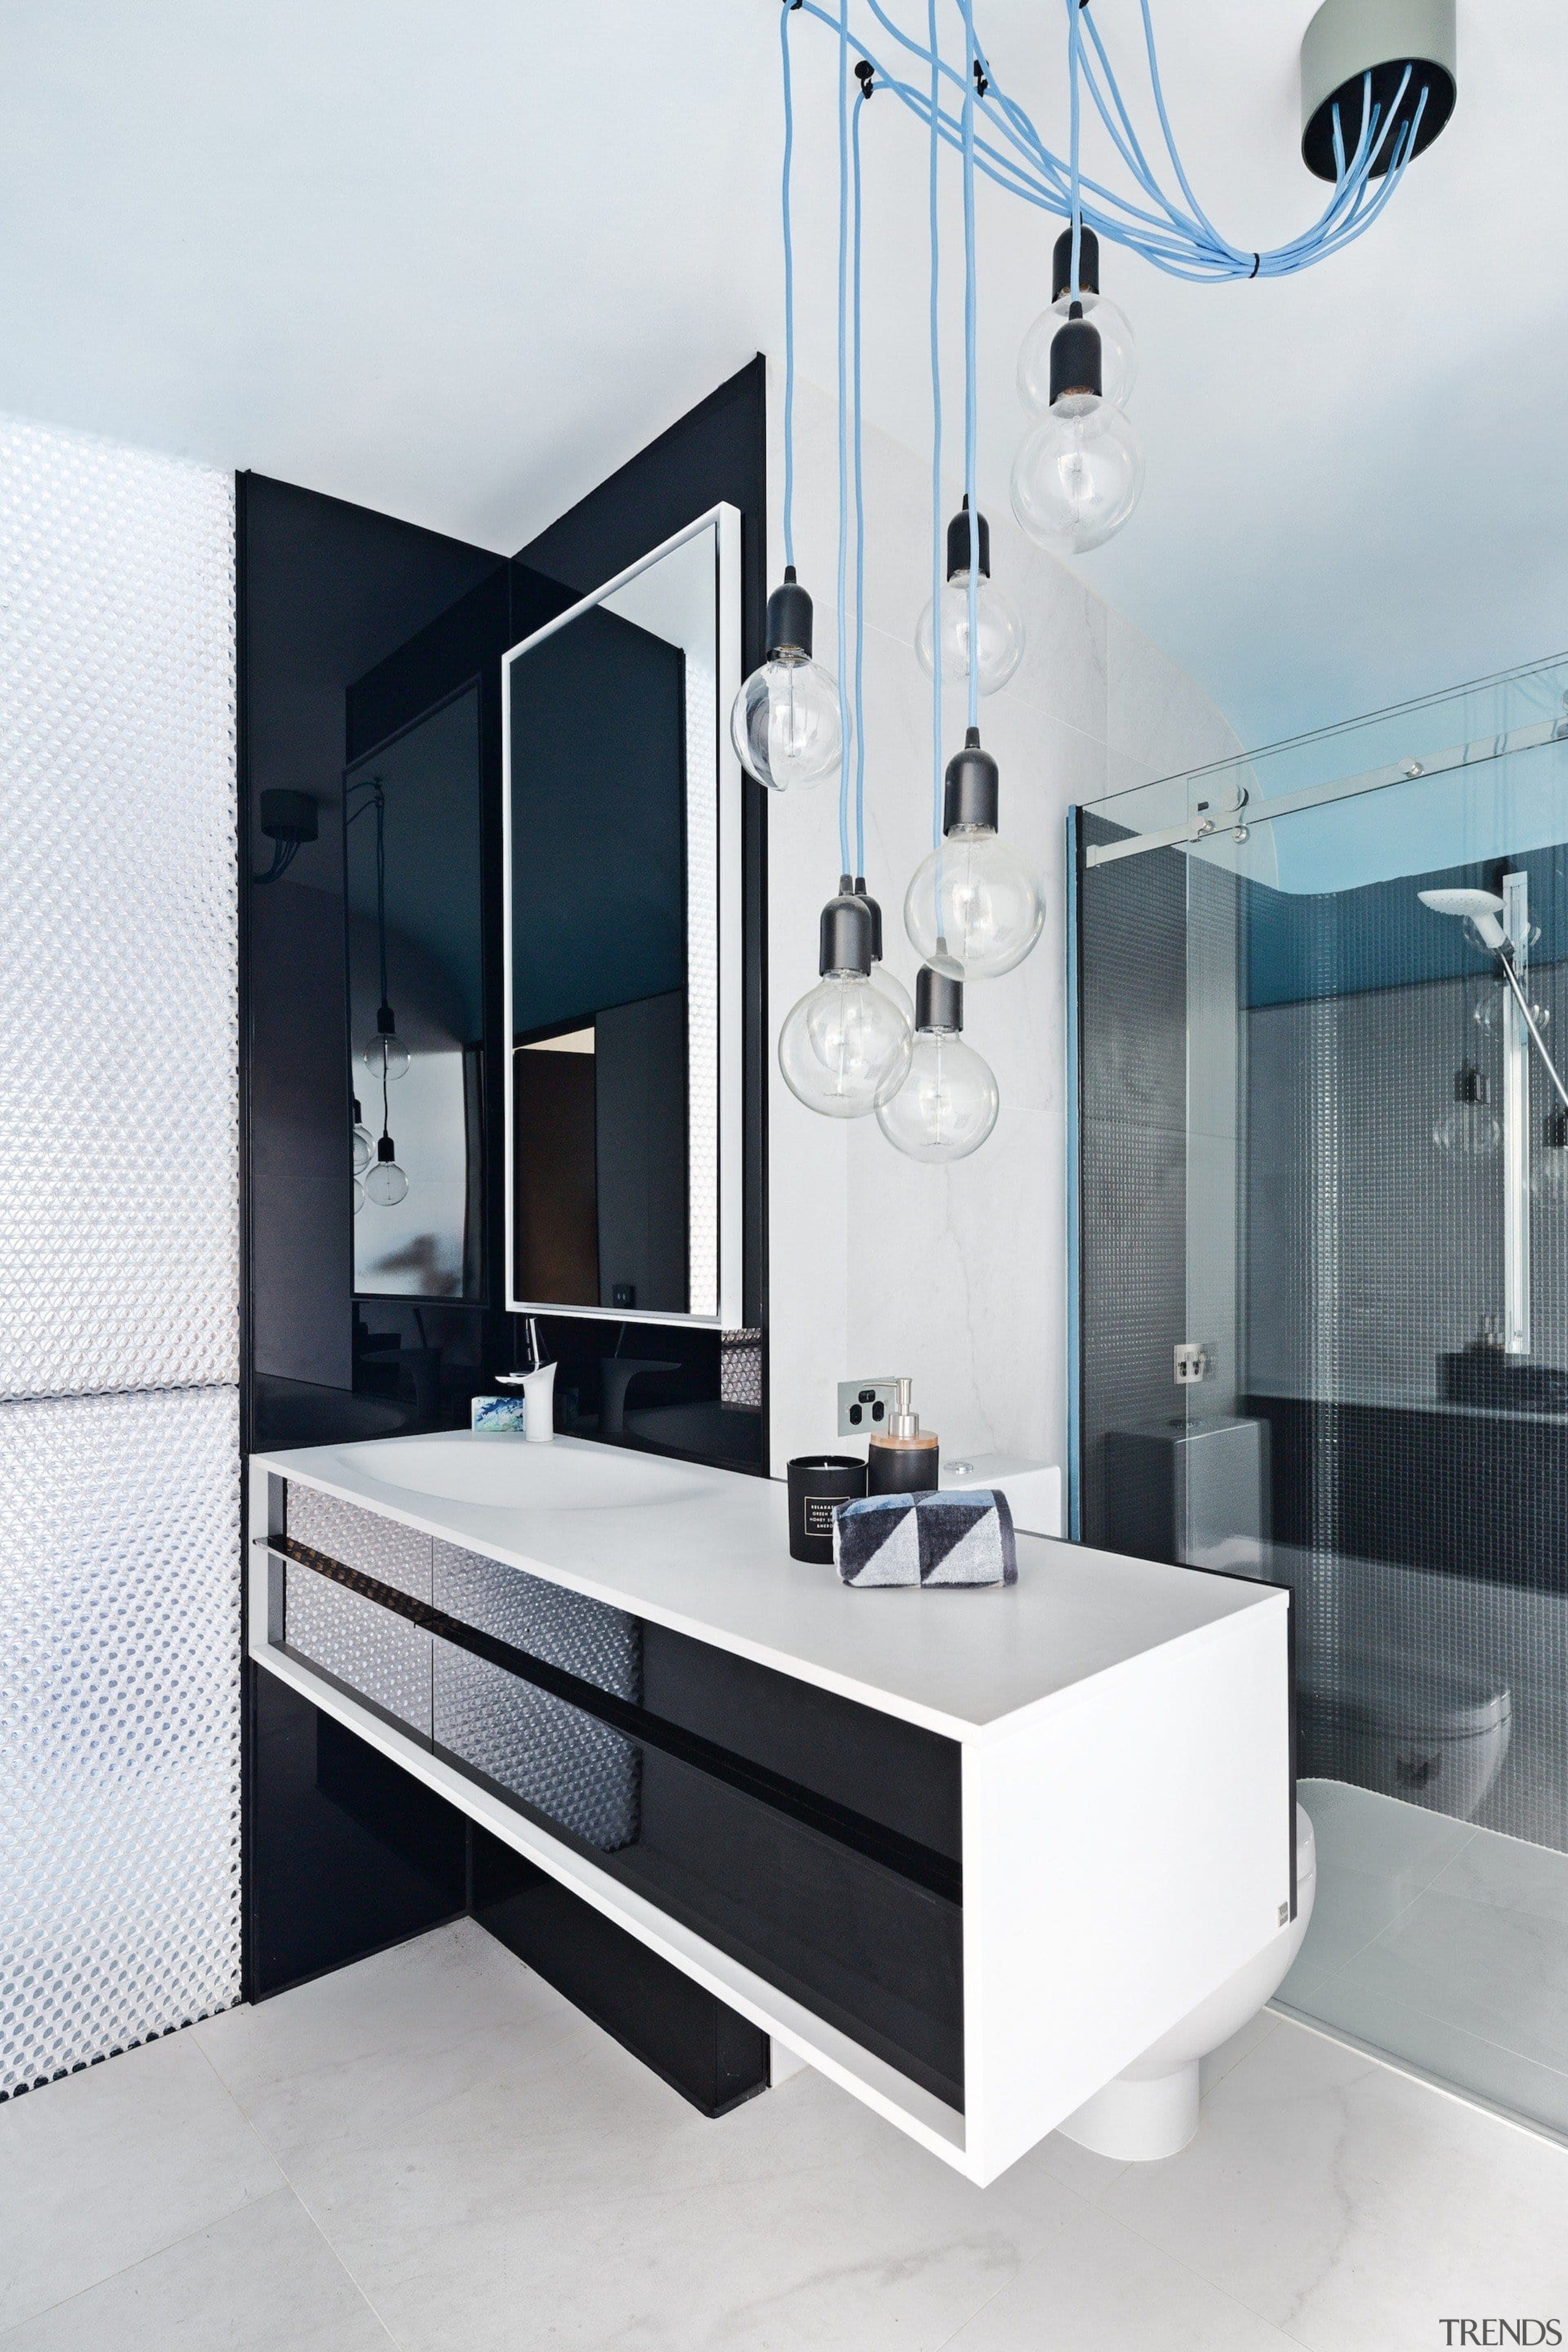 Saaj Design – Highly Commended – Tida Aus bathroom, bathroom accessory, bathroom cabinet, interior design, sink, tap, white